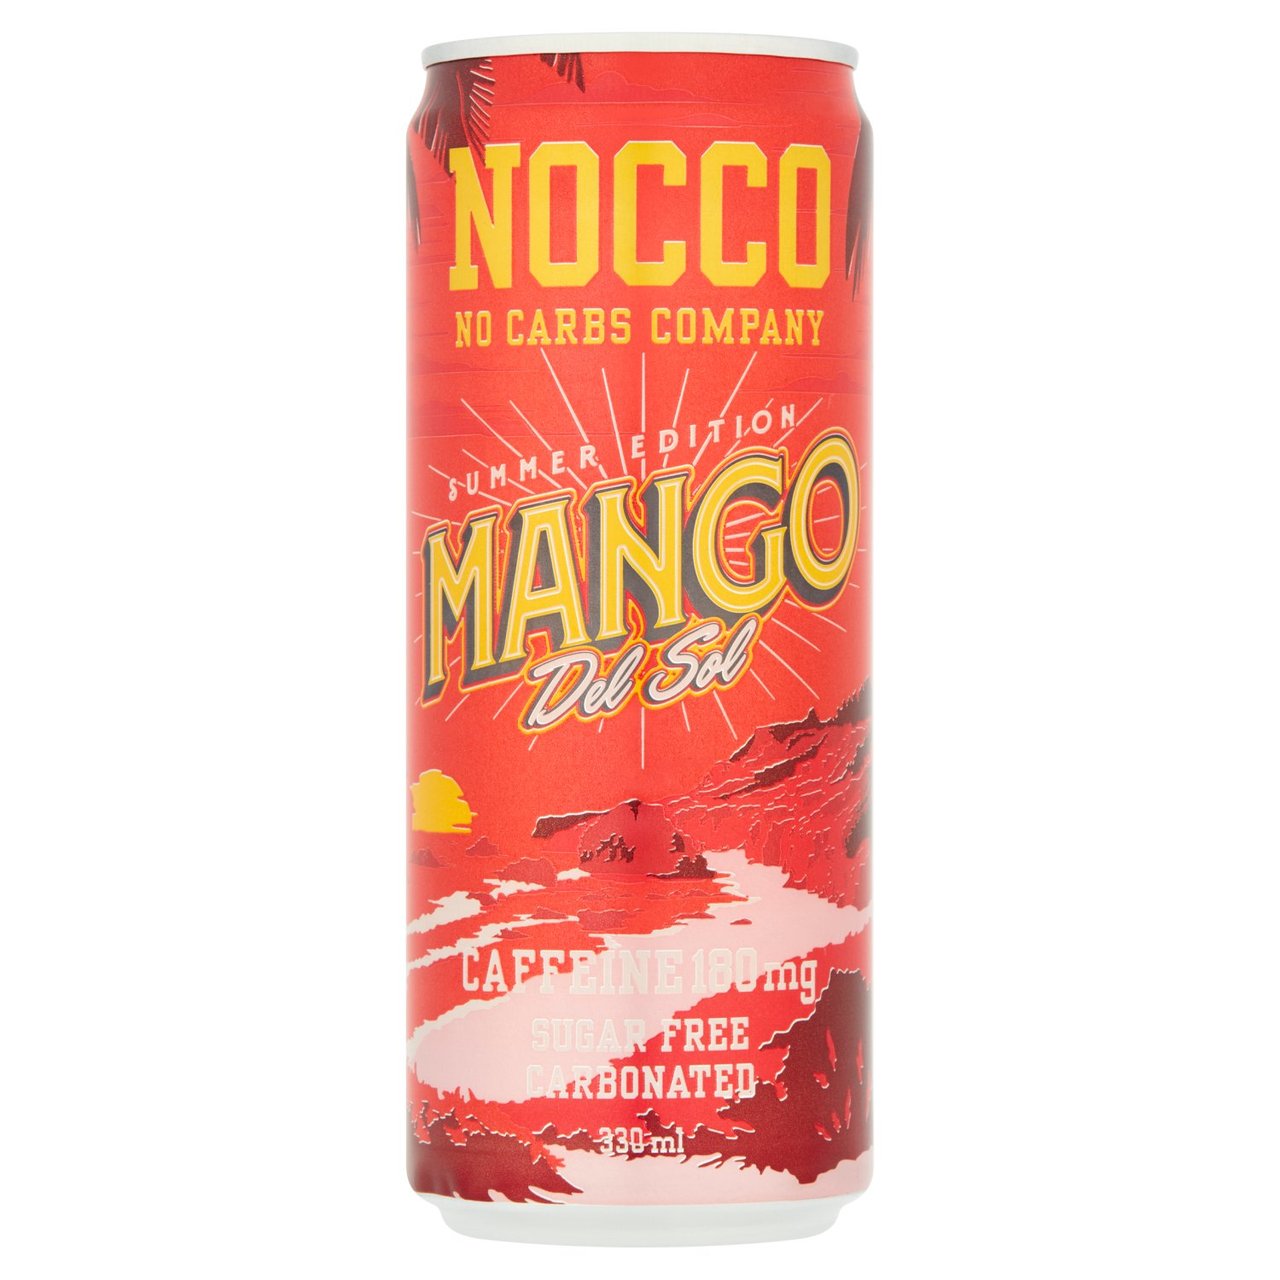 NOCCO Summer Edition Mango Del Sol Energy Drink 330ml x 12